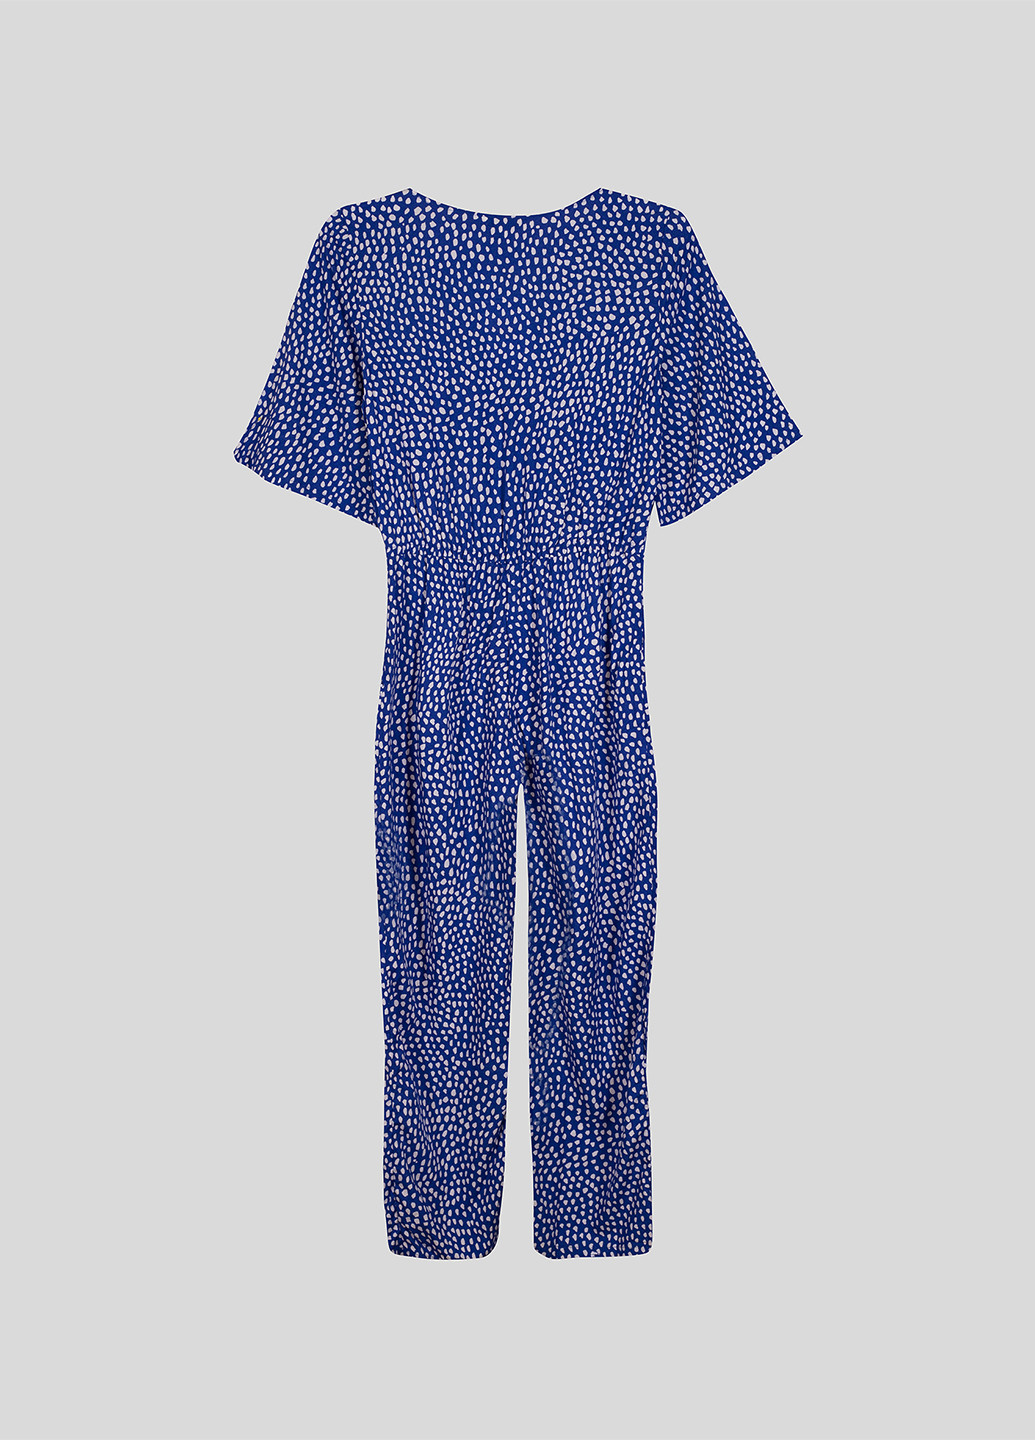 Комбинезон Monki комбинезон-брюки абстрактный синий кэжуал вискоза